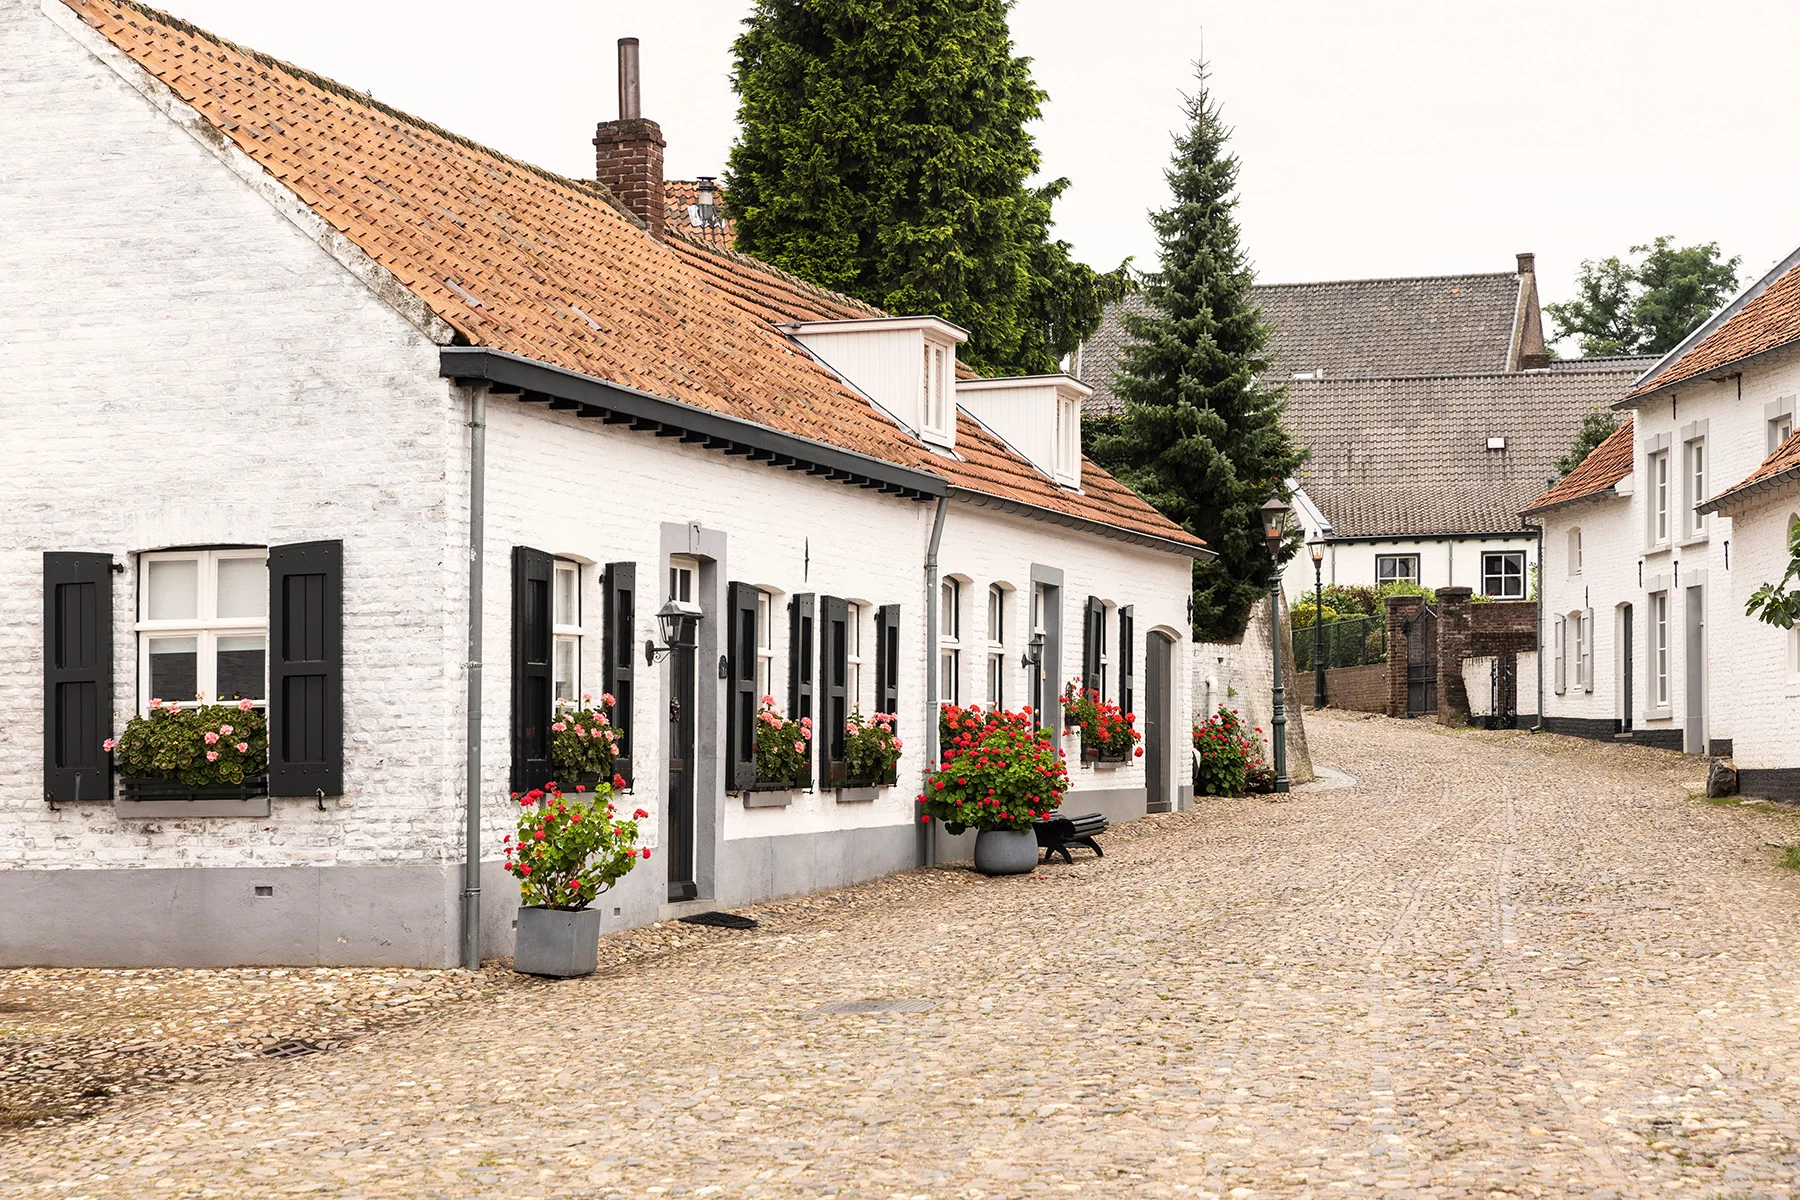 Houses in Limburg